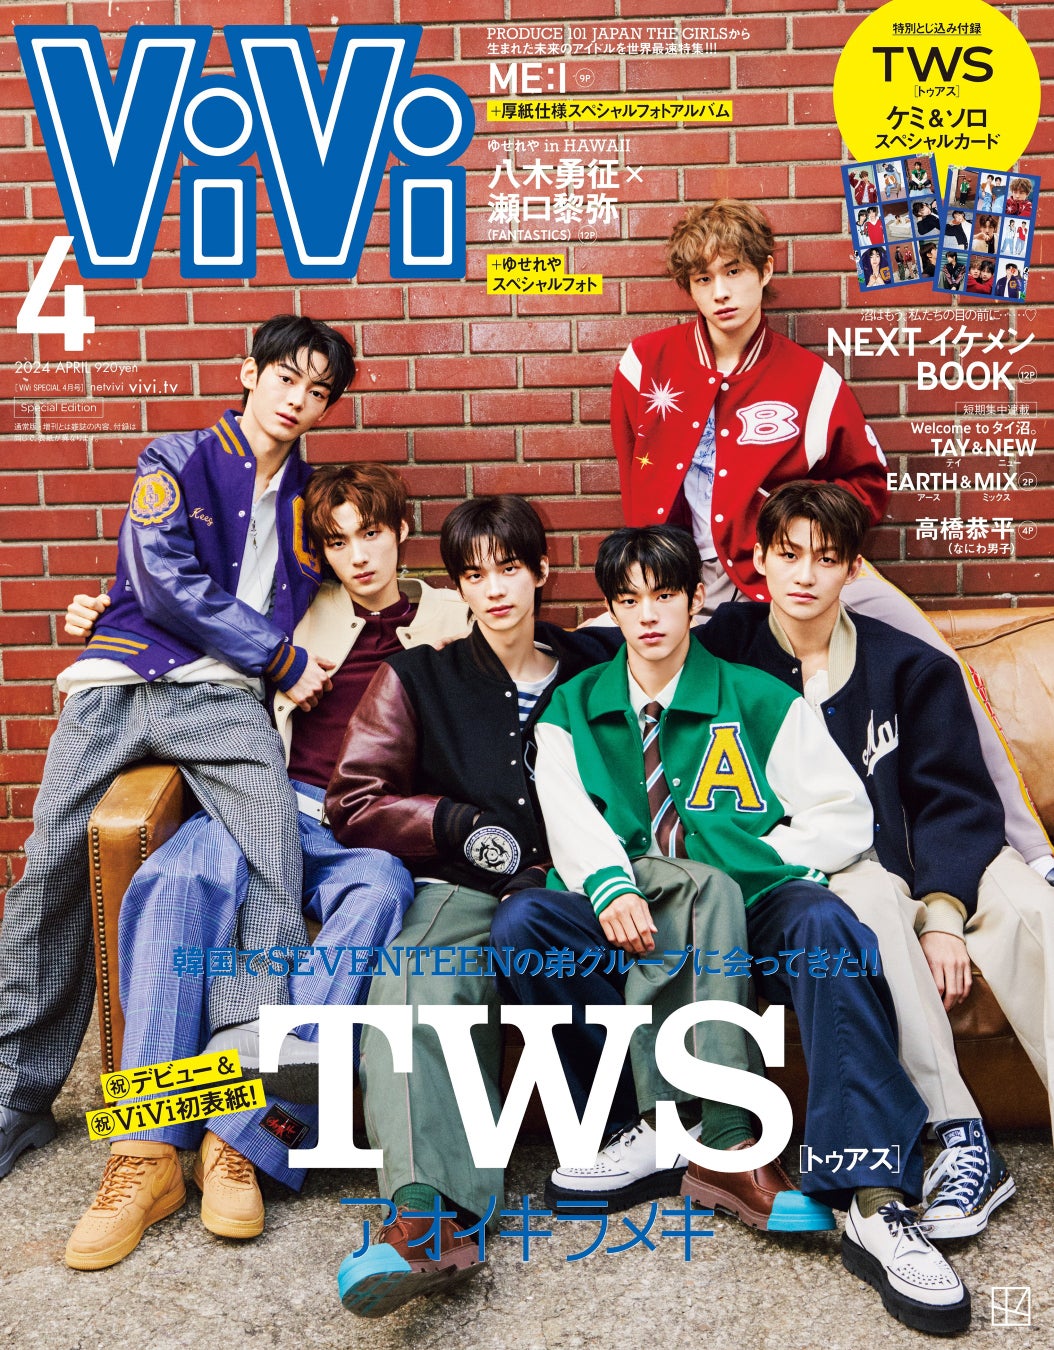 ViVi４月号特別版表紙は、話題のSEVENTEENの弟グループ・TWS。デビューしたばかりの韓国ボーイグループでは異例の２号連続特集&特別版表紙。ケミ&ソロ スペシャルカード付き